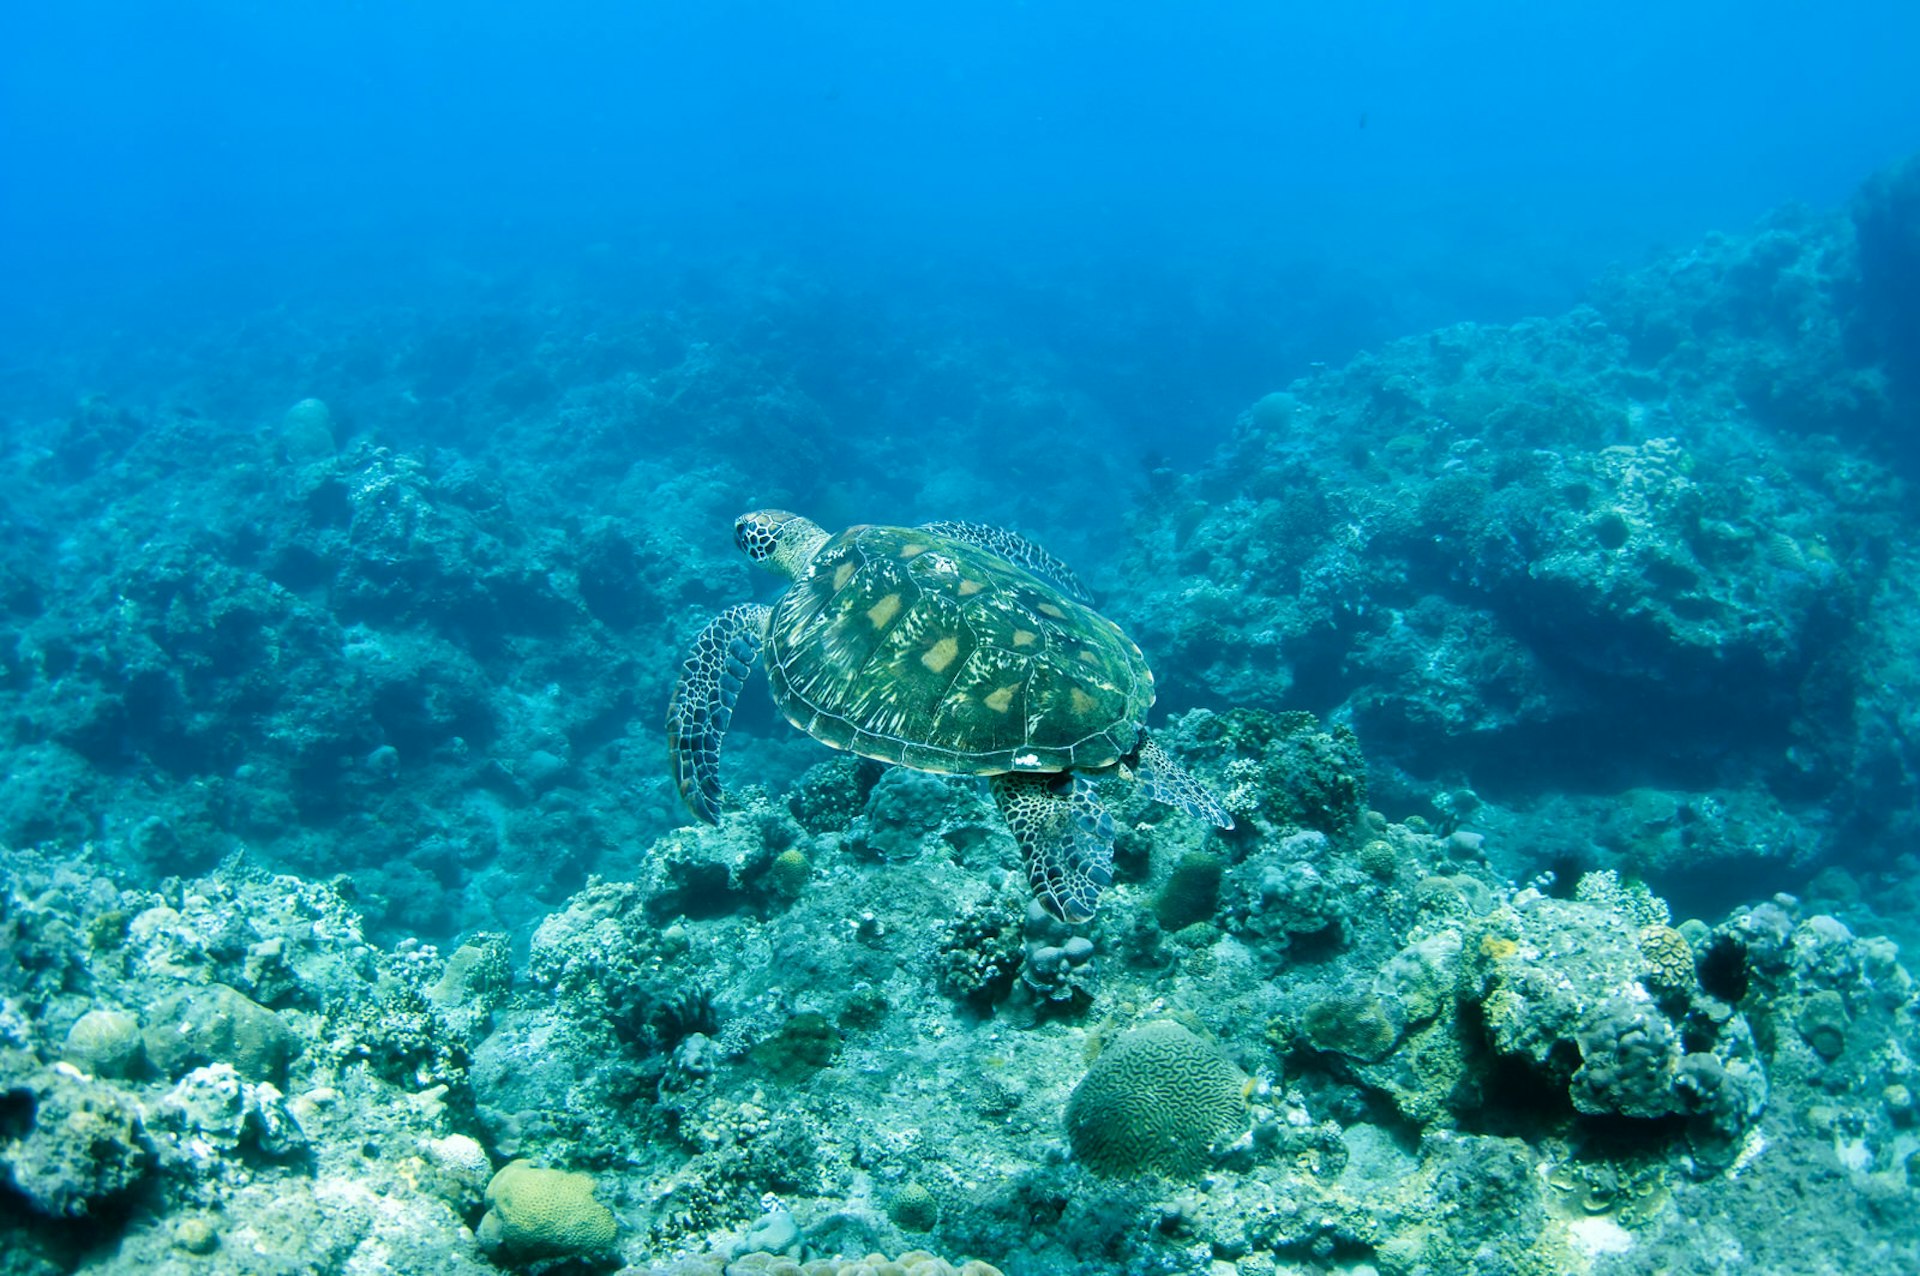 Snorkellers can often spot gentle sea turtles swimming in the shallows off Little Liuchiu © Jung Hsuan / Shutterstock